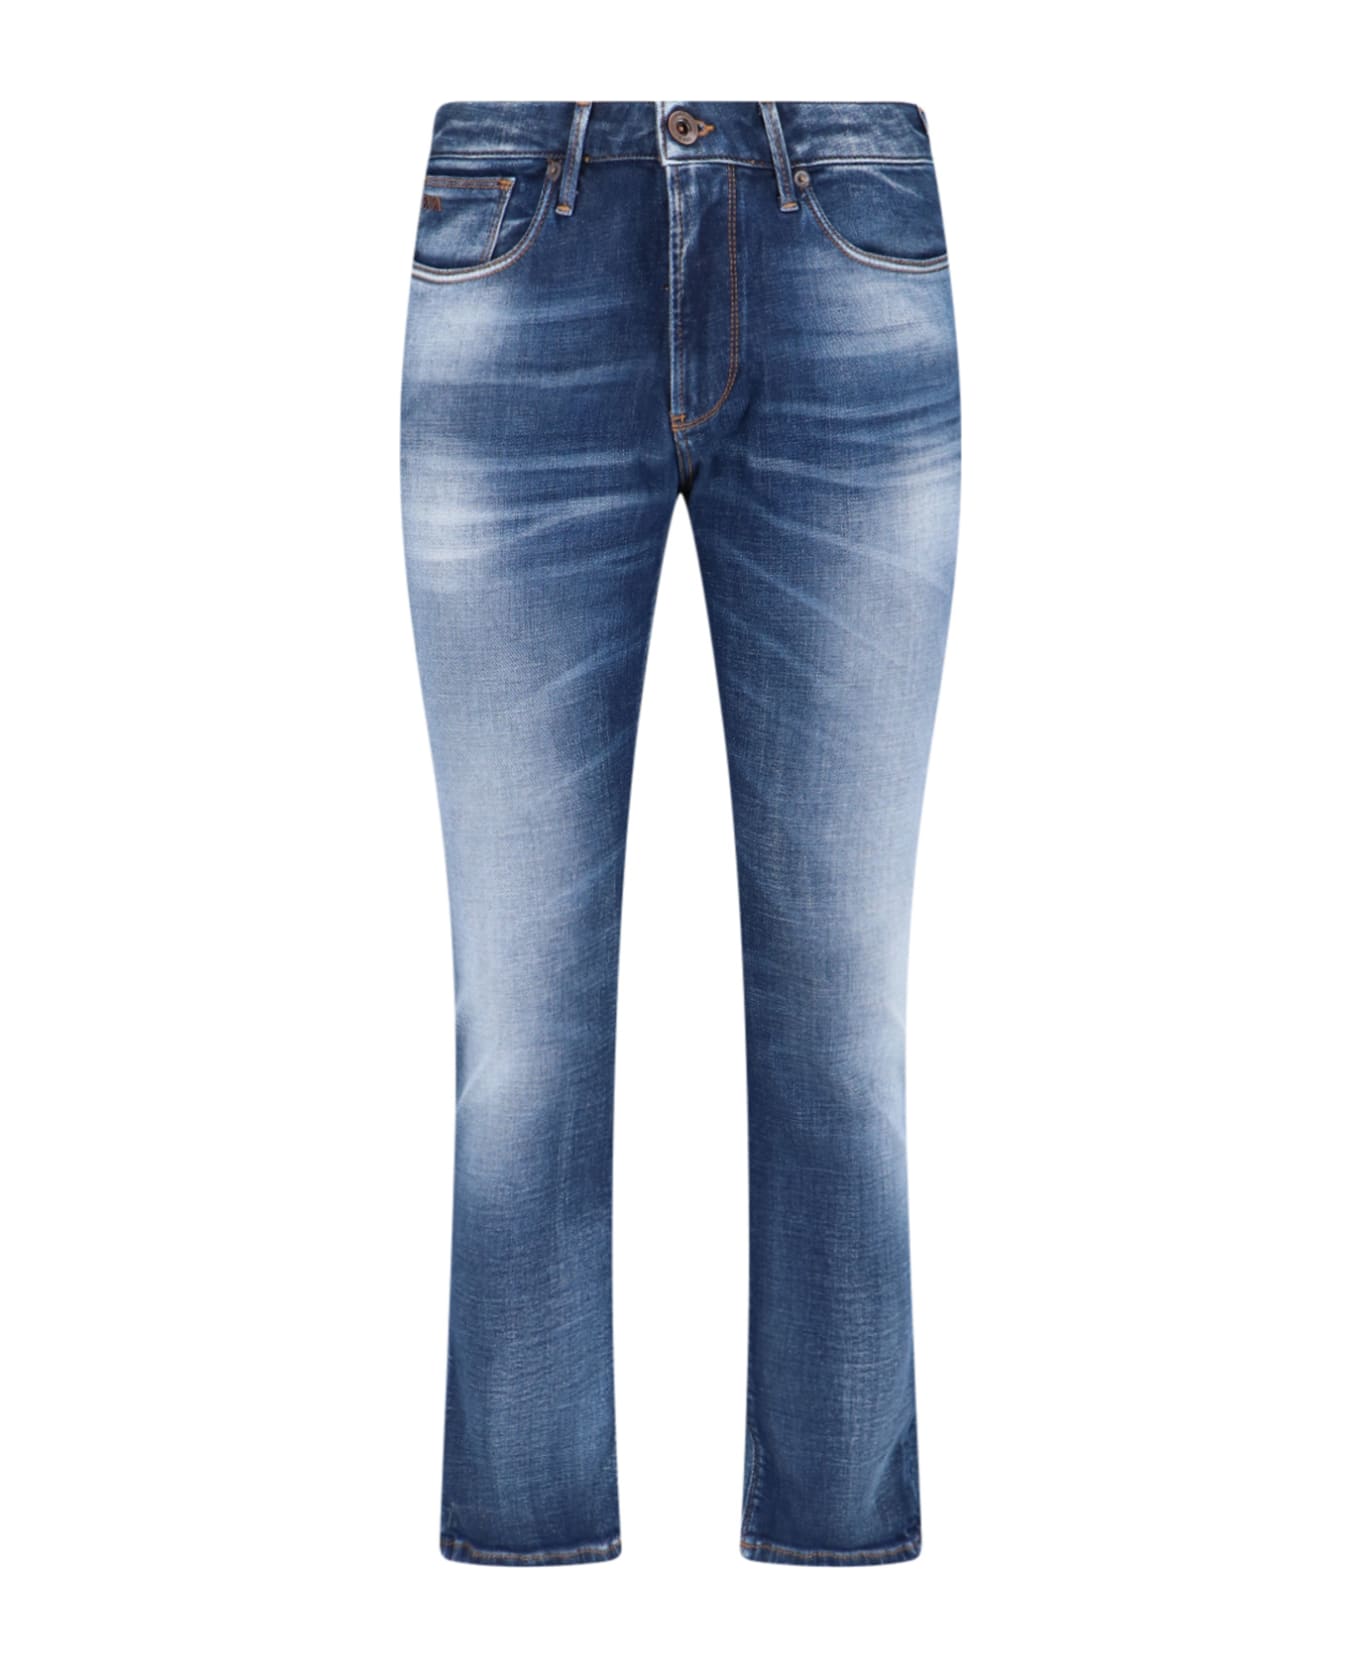 Emporio Armani Slim Jeans - Blue